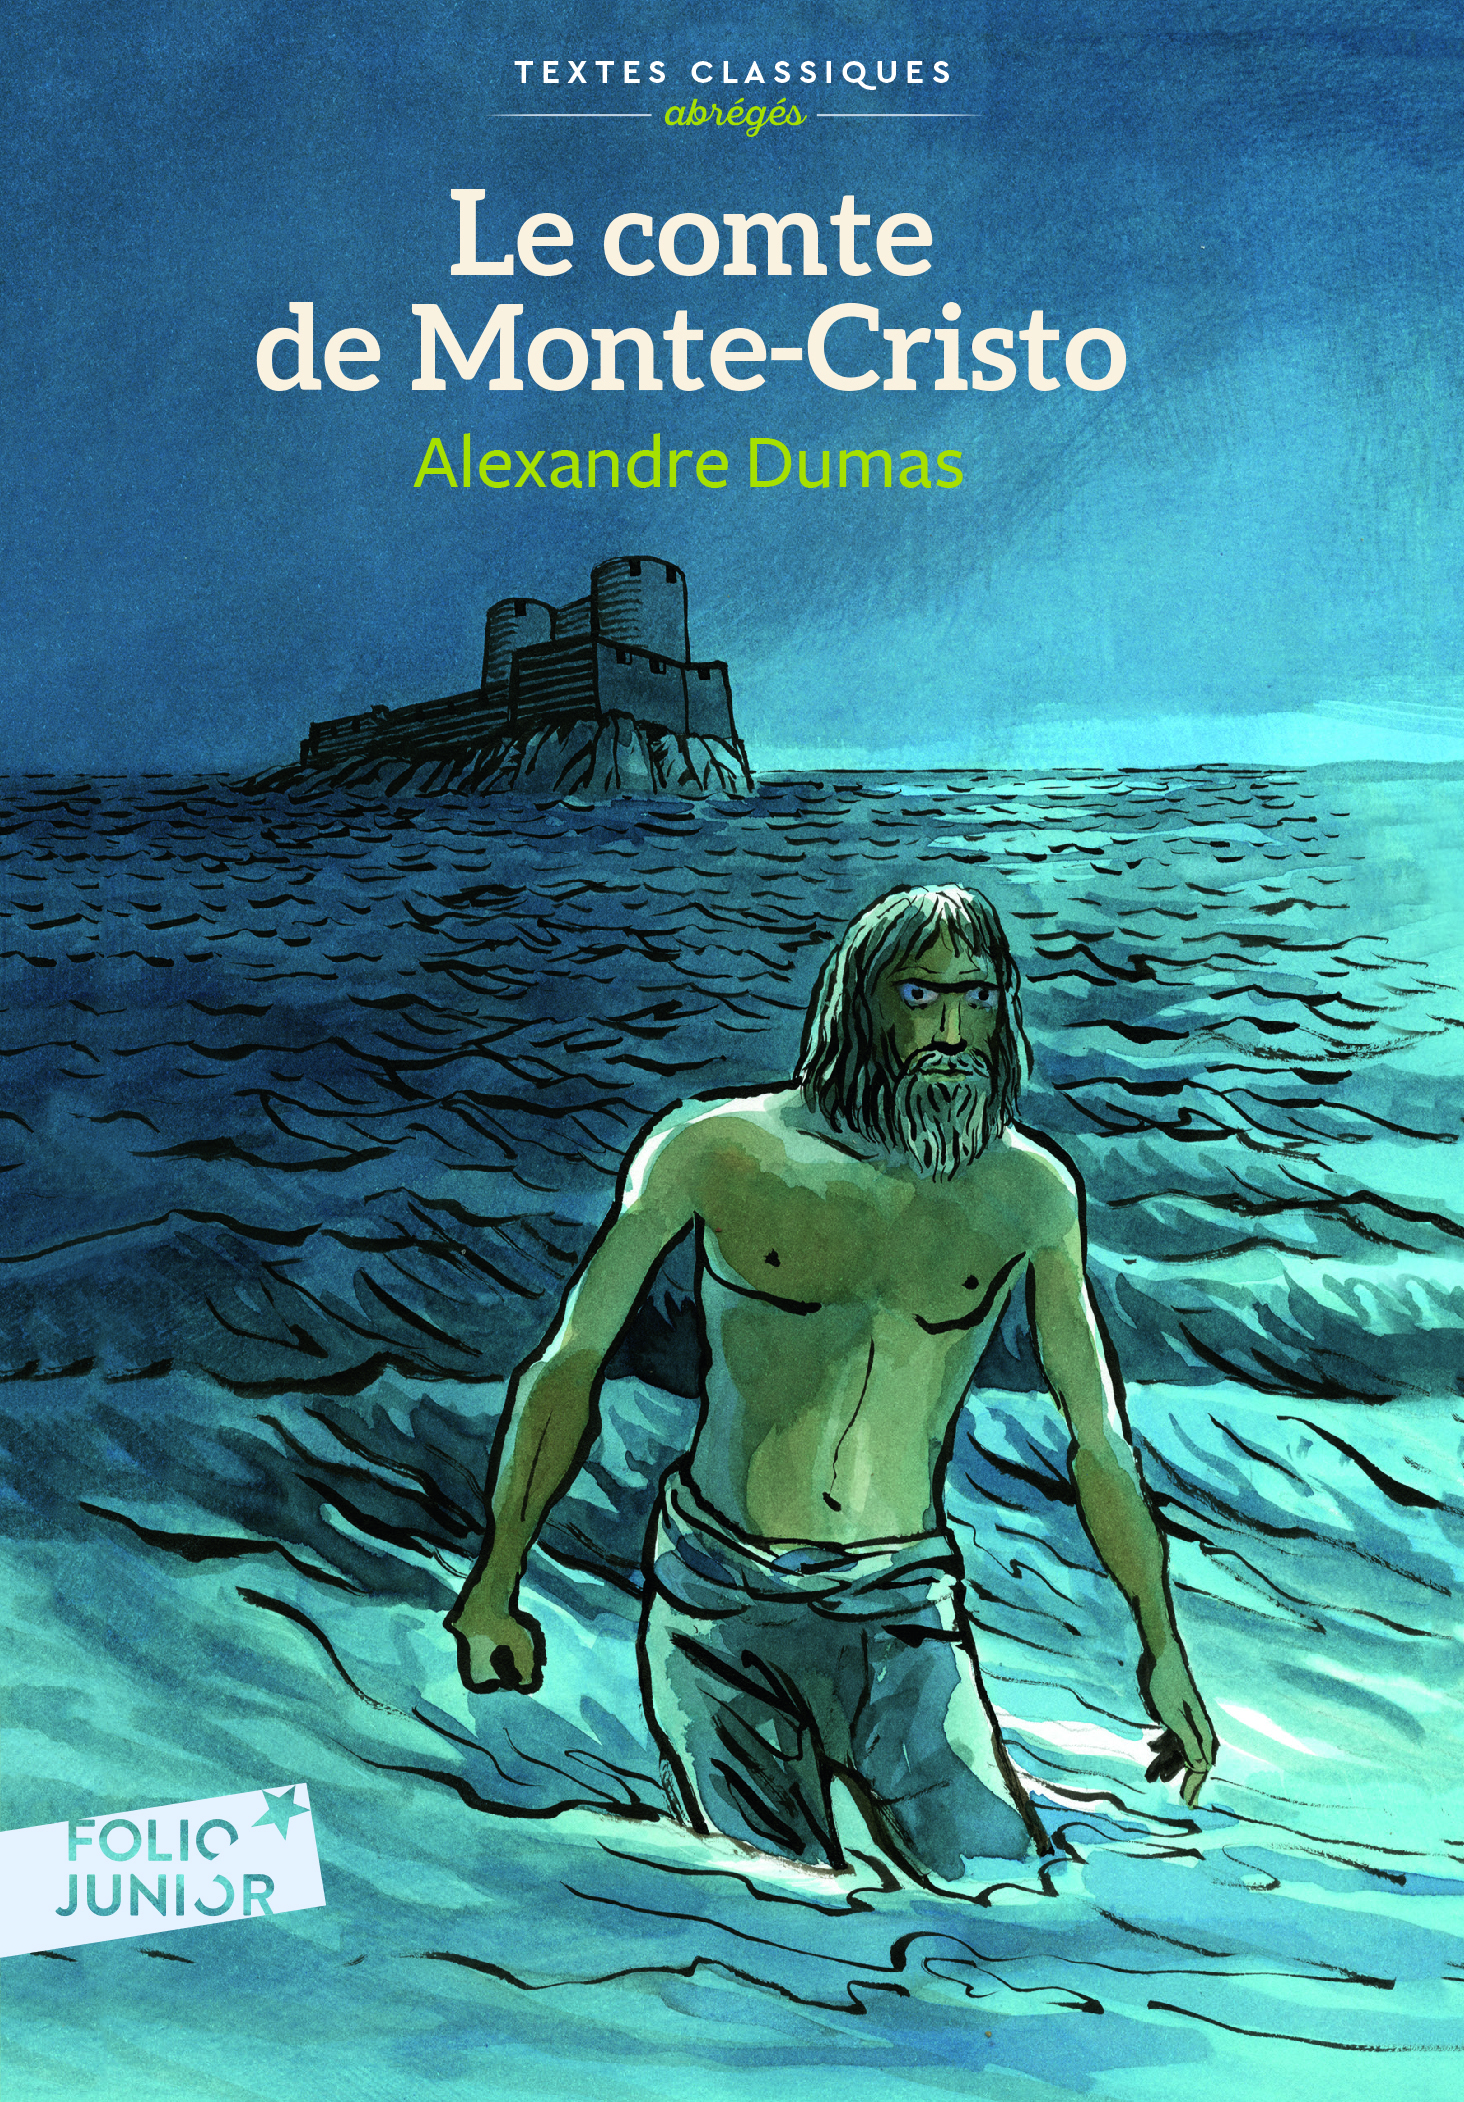 Le comte de Monte-Cristo (9782070645138-front-cover)